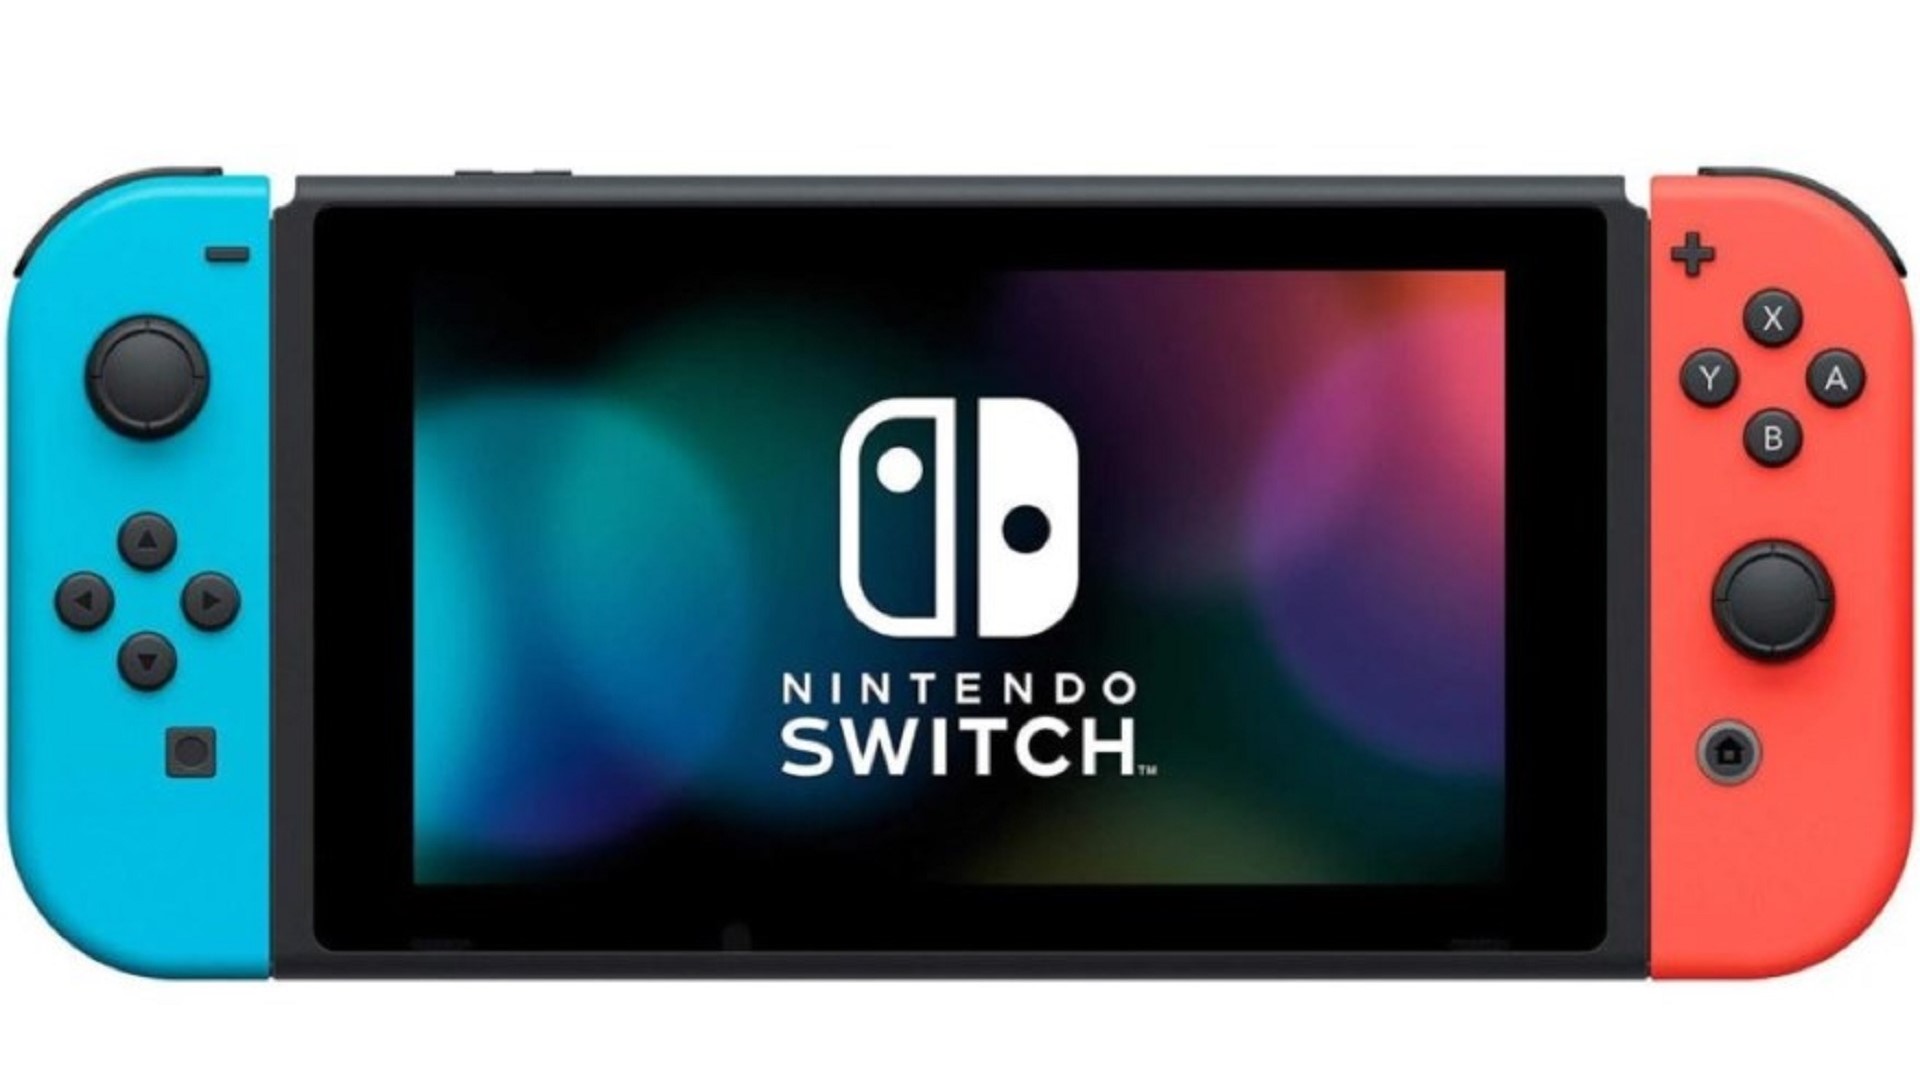 Nintendo Switch Image 2